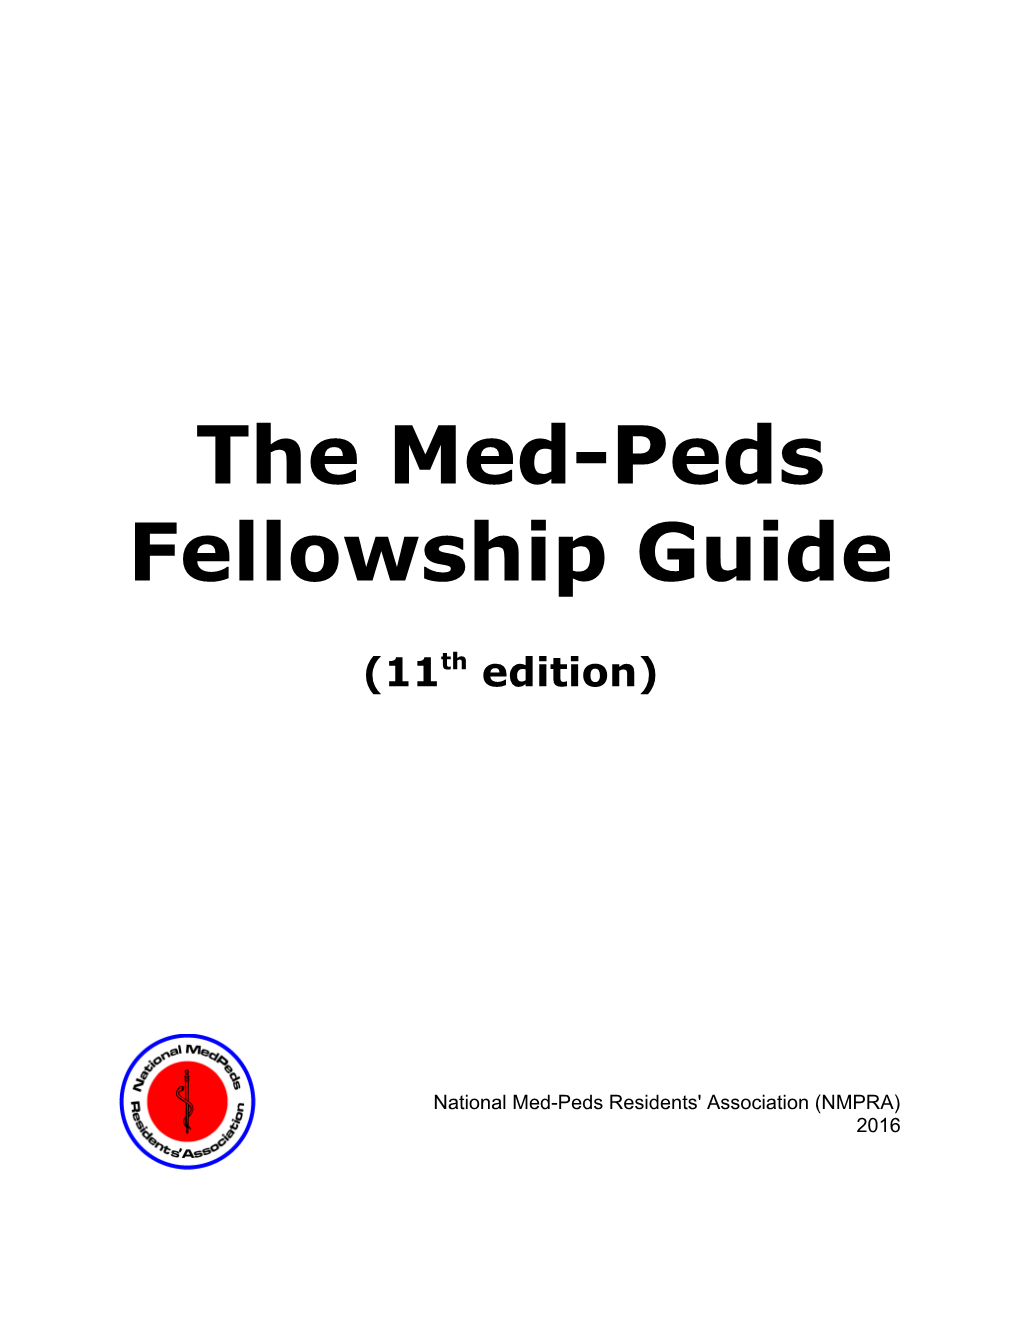 Fellowship Guide for Combined Internal Medicine/Pediatrics Residents